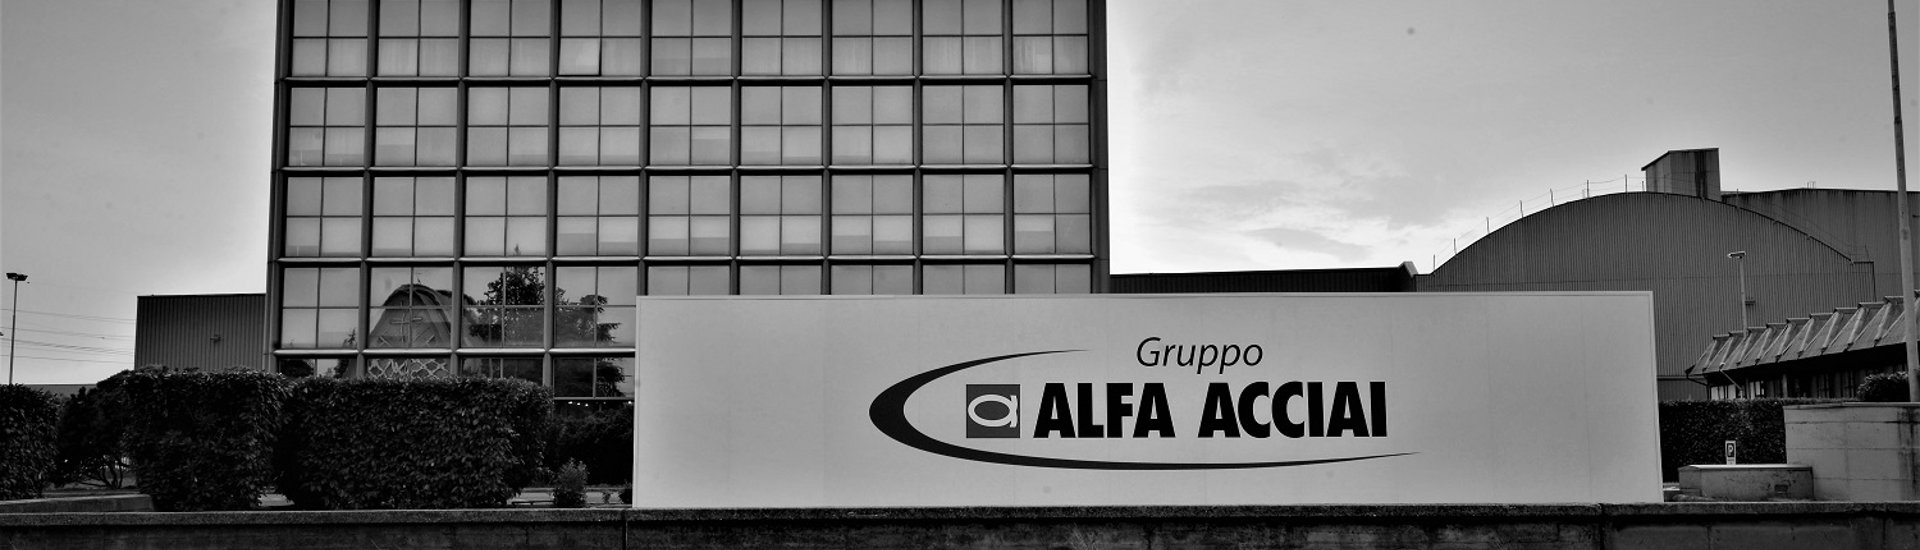 Alfa Acciai Group Companies